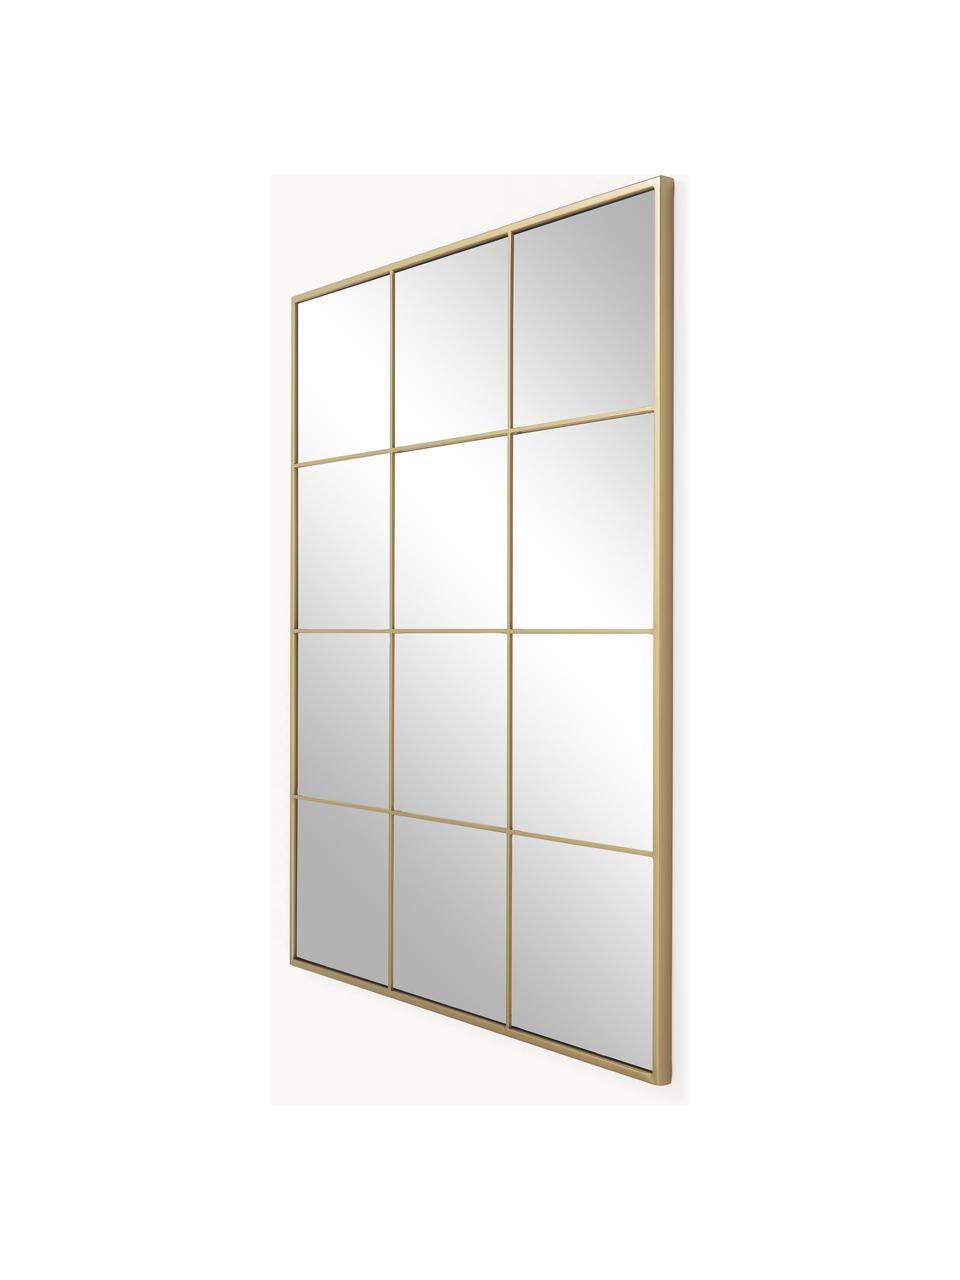 Nástěnné zrcadlo Clarita, Zlatá, Š 70 cm, V 90 cm